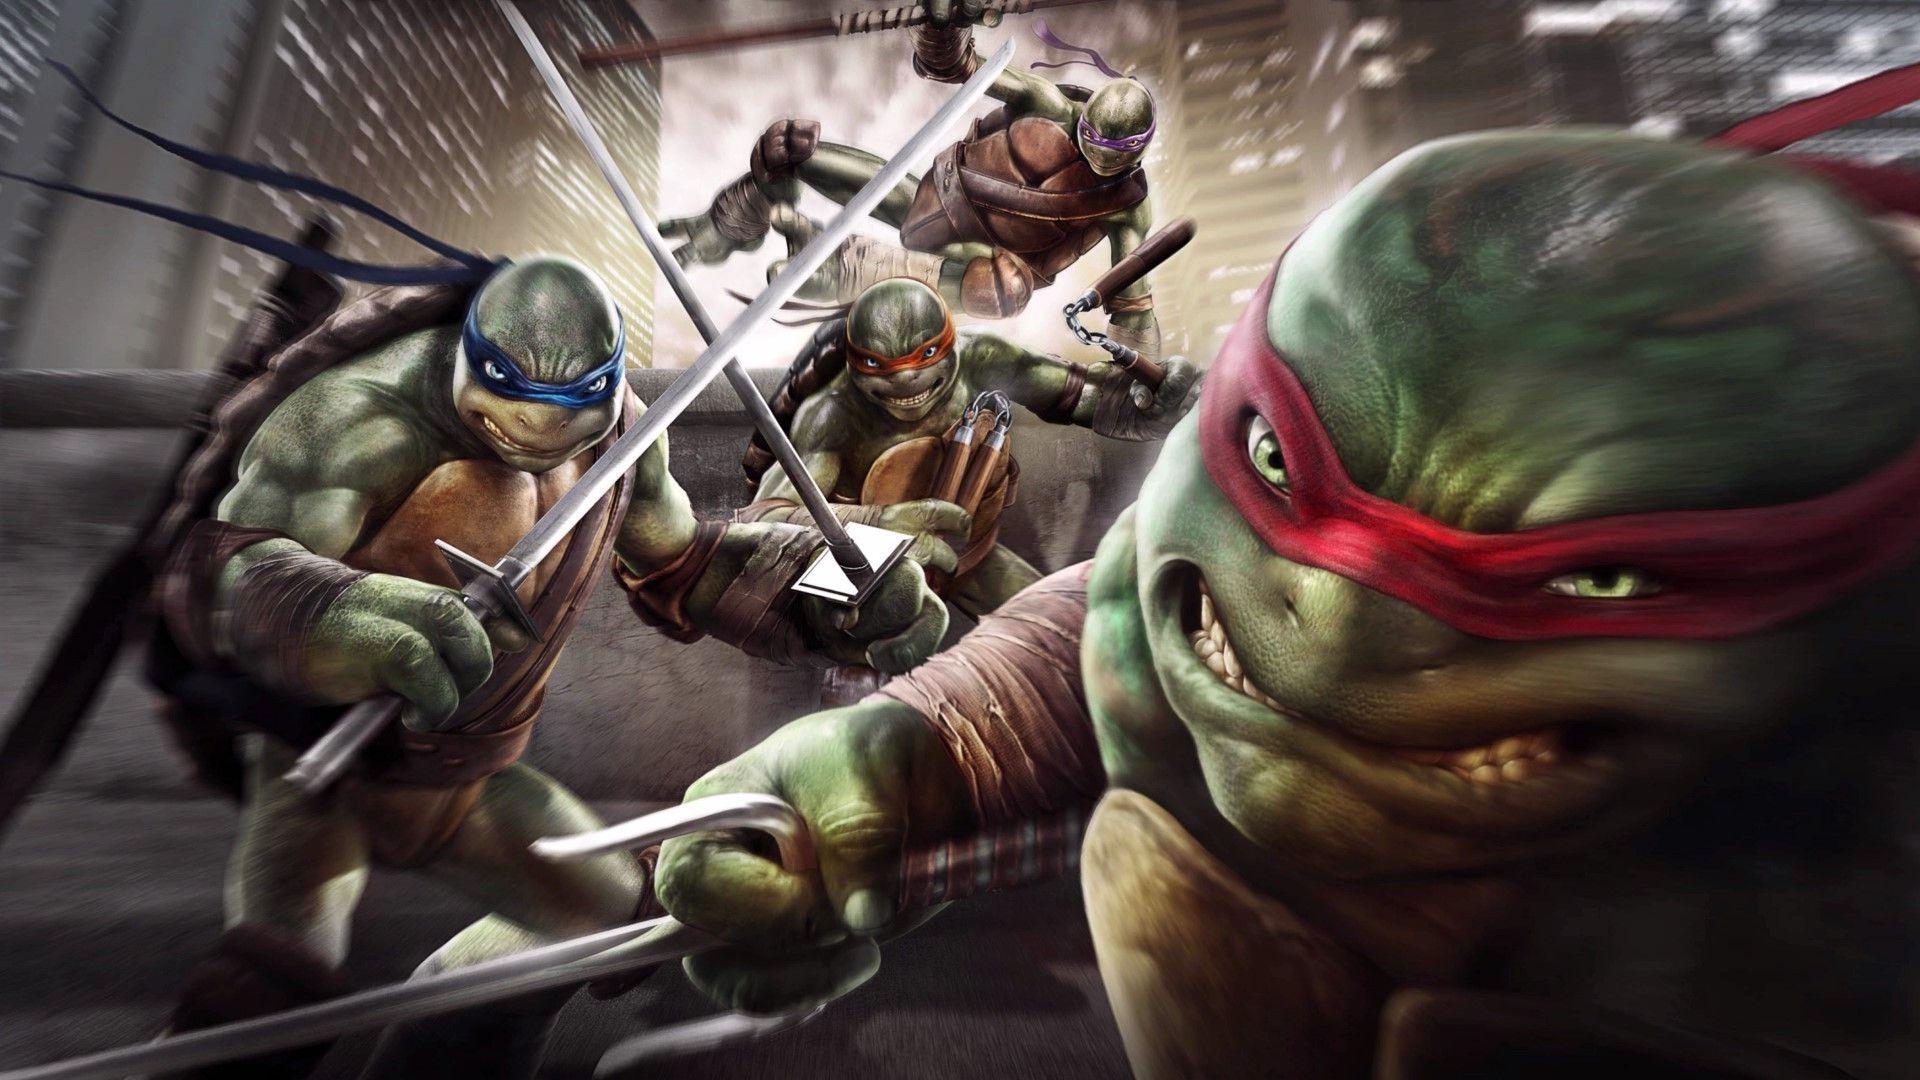 Tải Teenage Mutant Ninja Turtles Legends cho Android  Game ninja rùa miễn  phí cho Android  Downvn